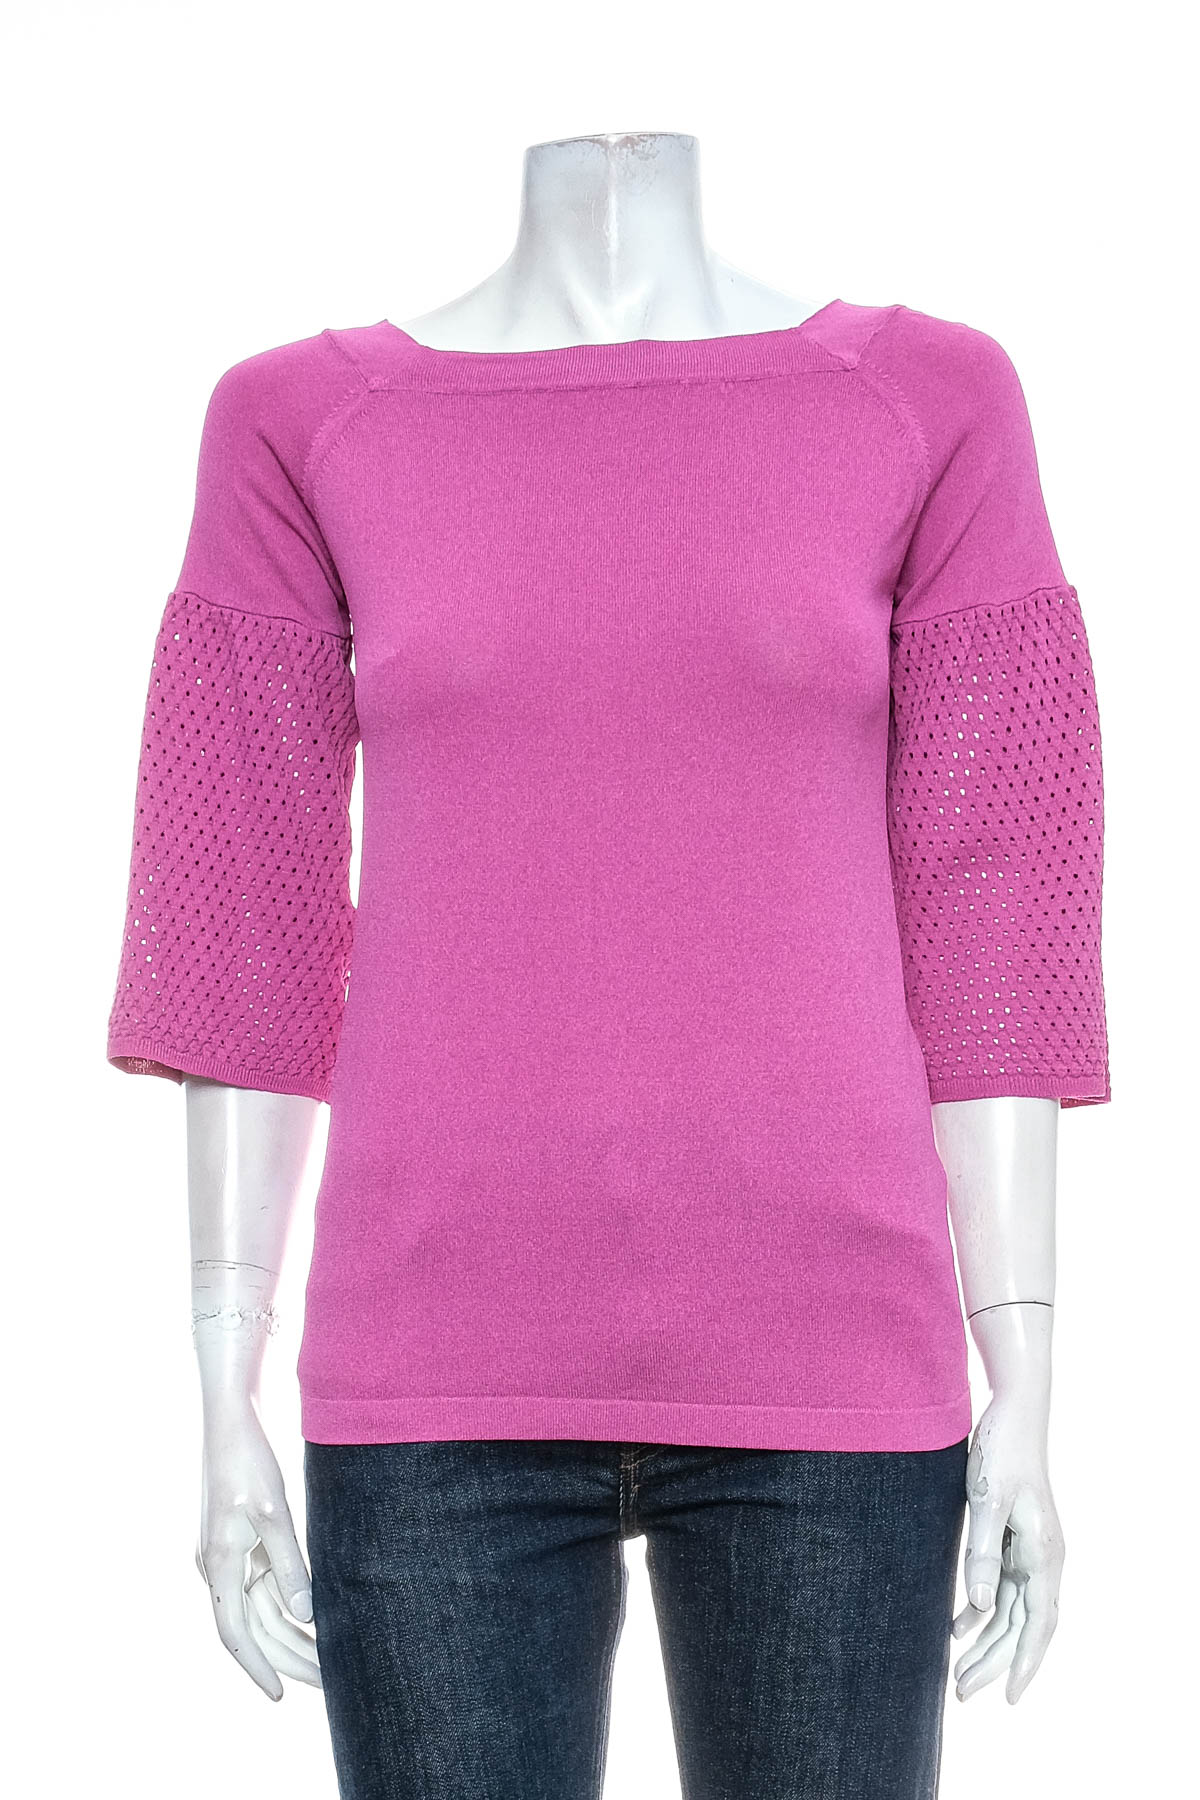 Women's sweater - Rinascimento - 0